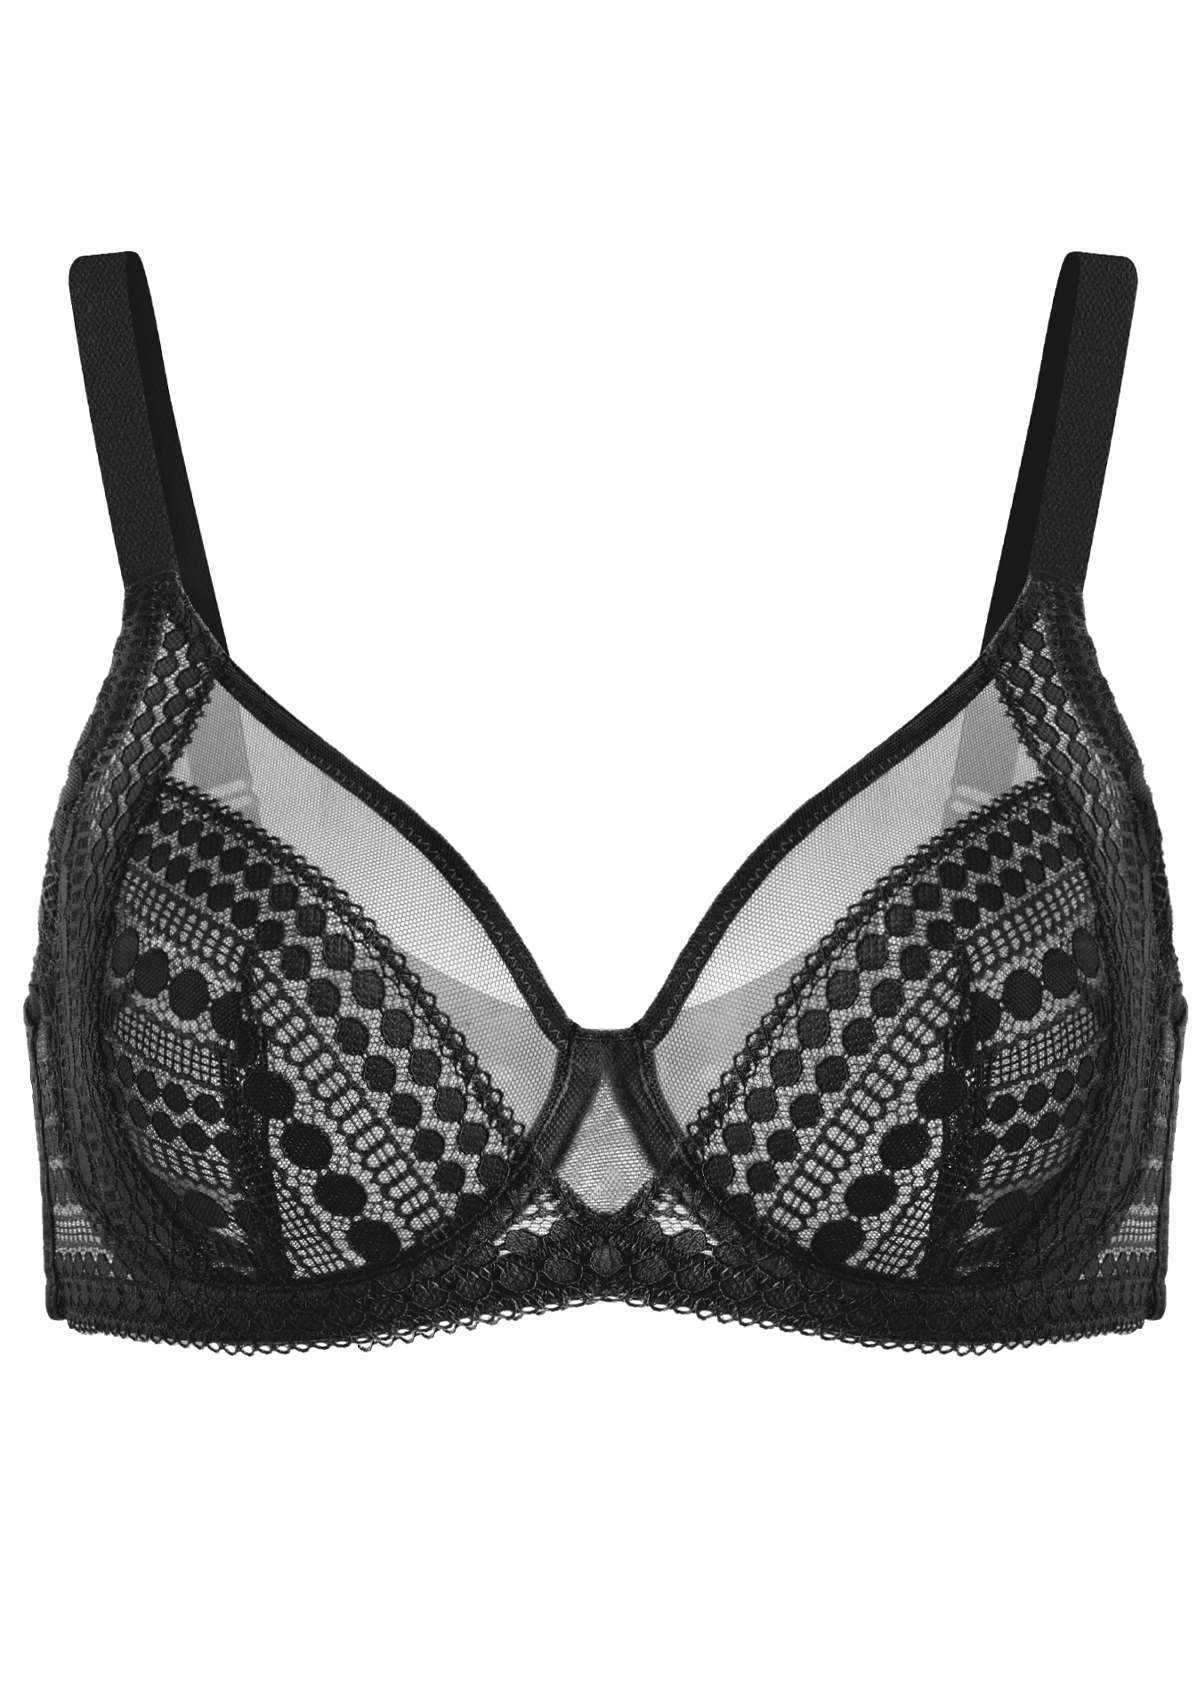 HSIA Heroine Matching Bra And Panties: Unlined Lace Unpadded Bra - Black / 36 / DDD/F